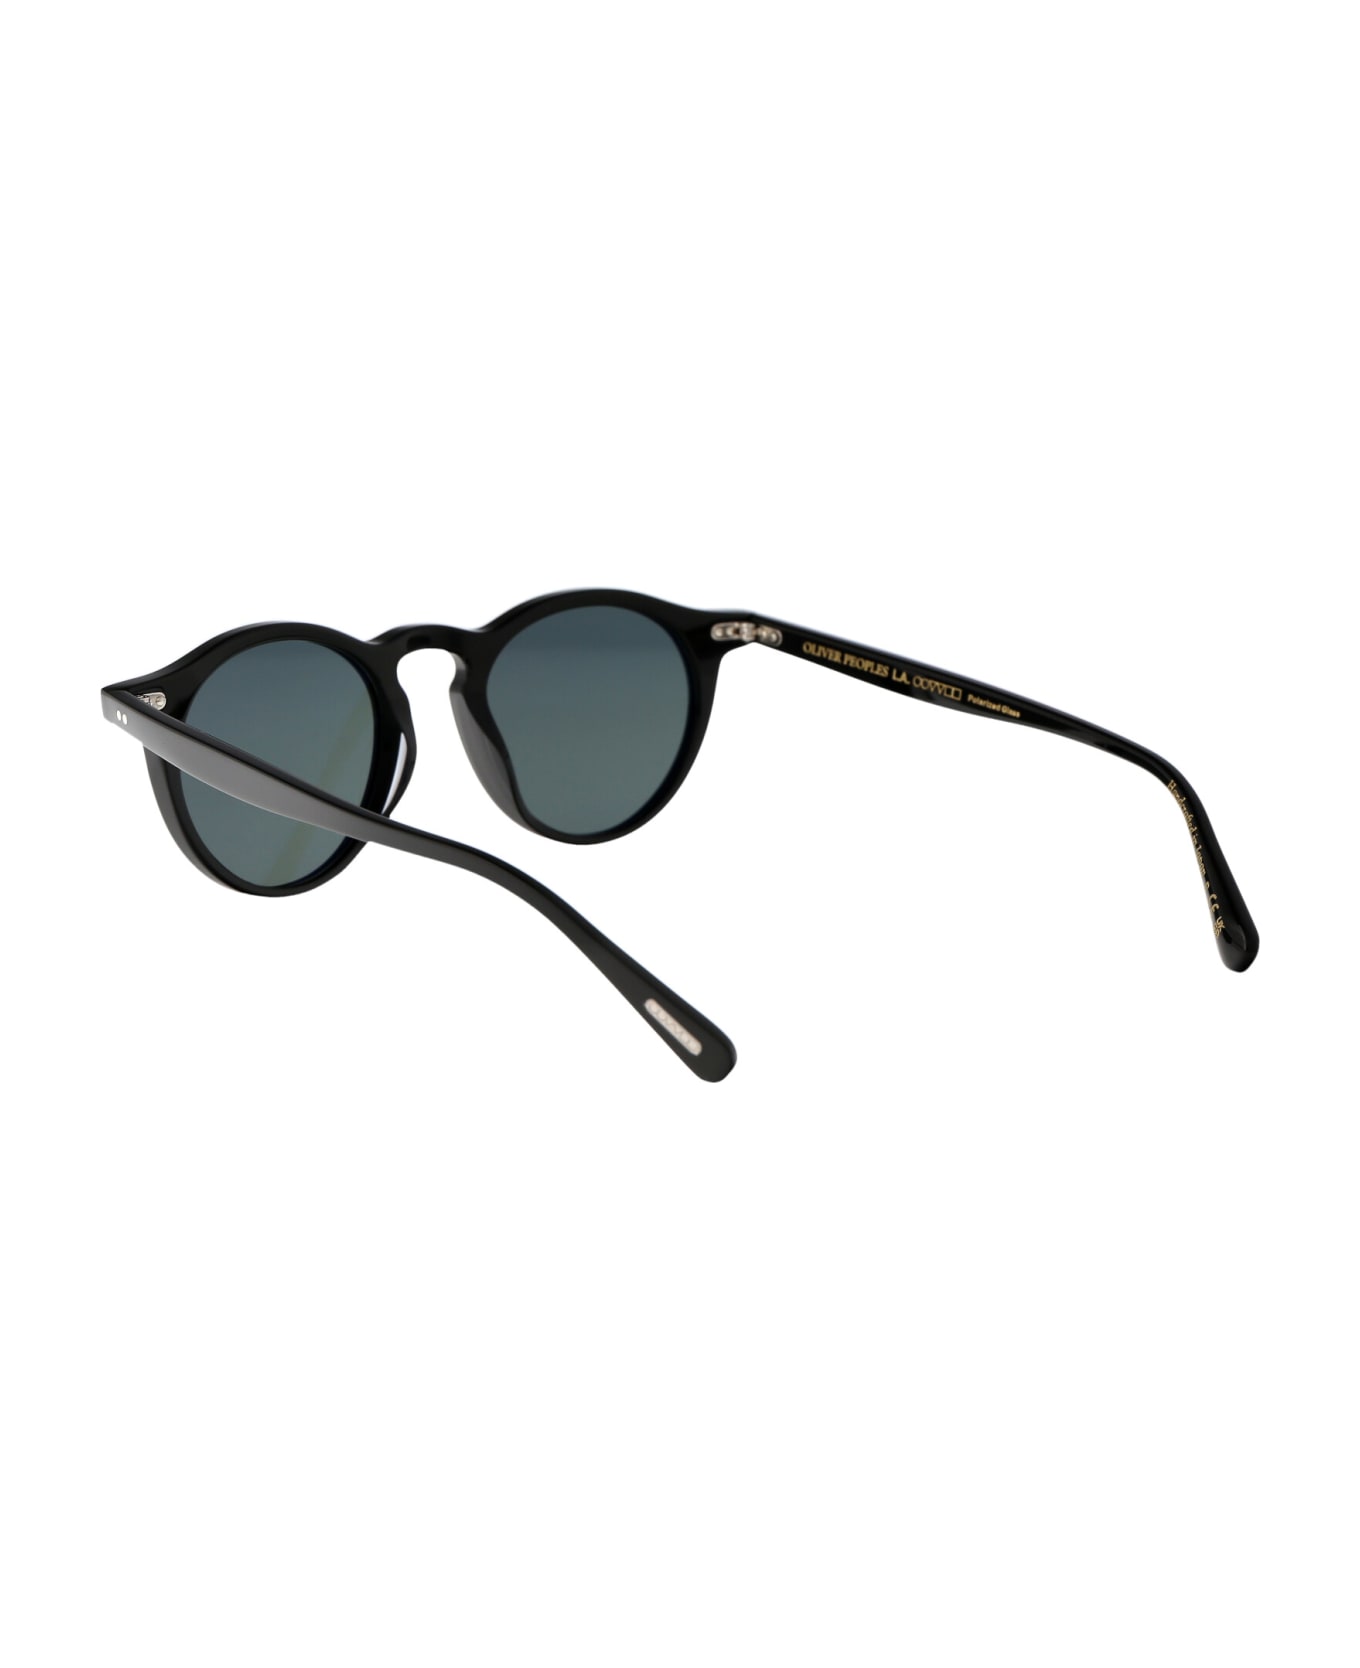 Oliver Peoples Op-13 Sun Sunglasses - 1731P2 Black サングラス